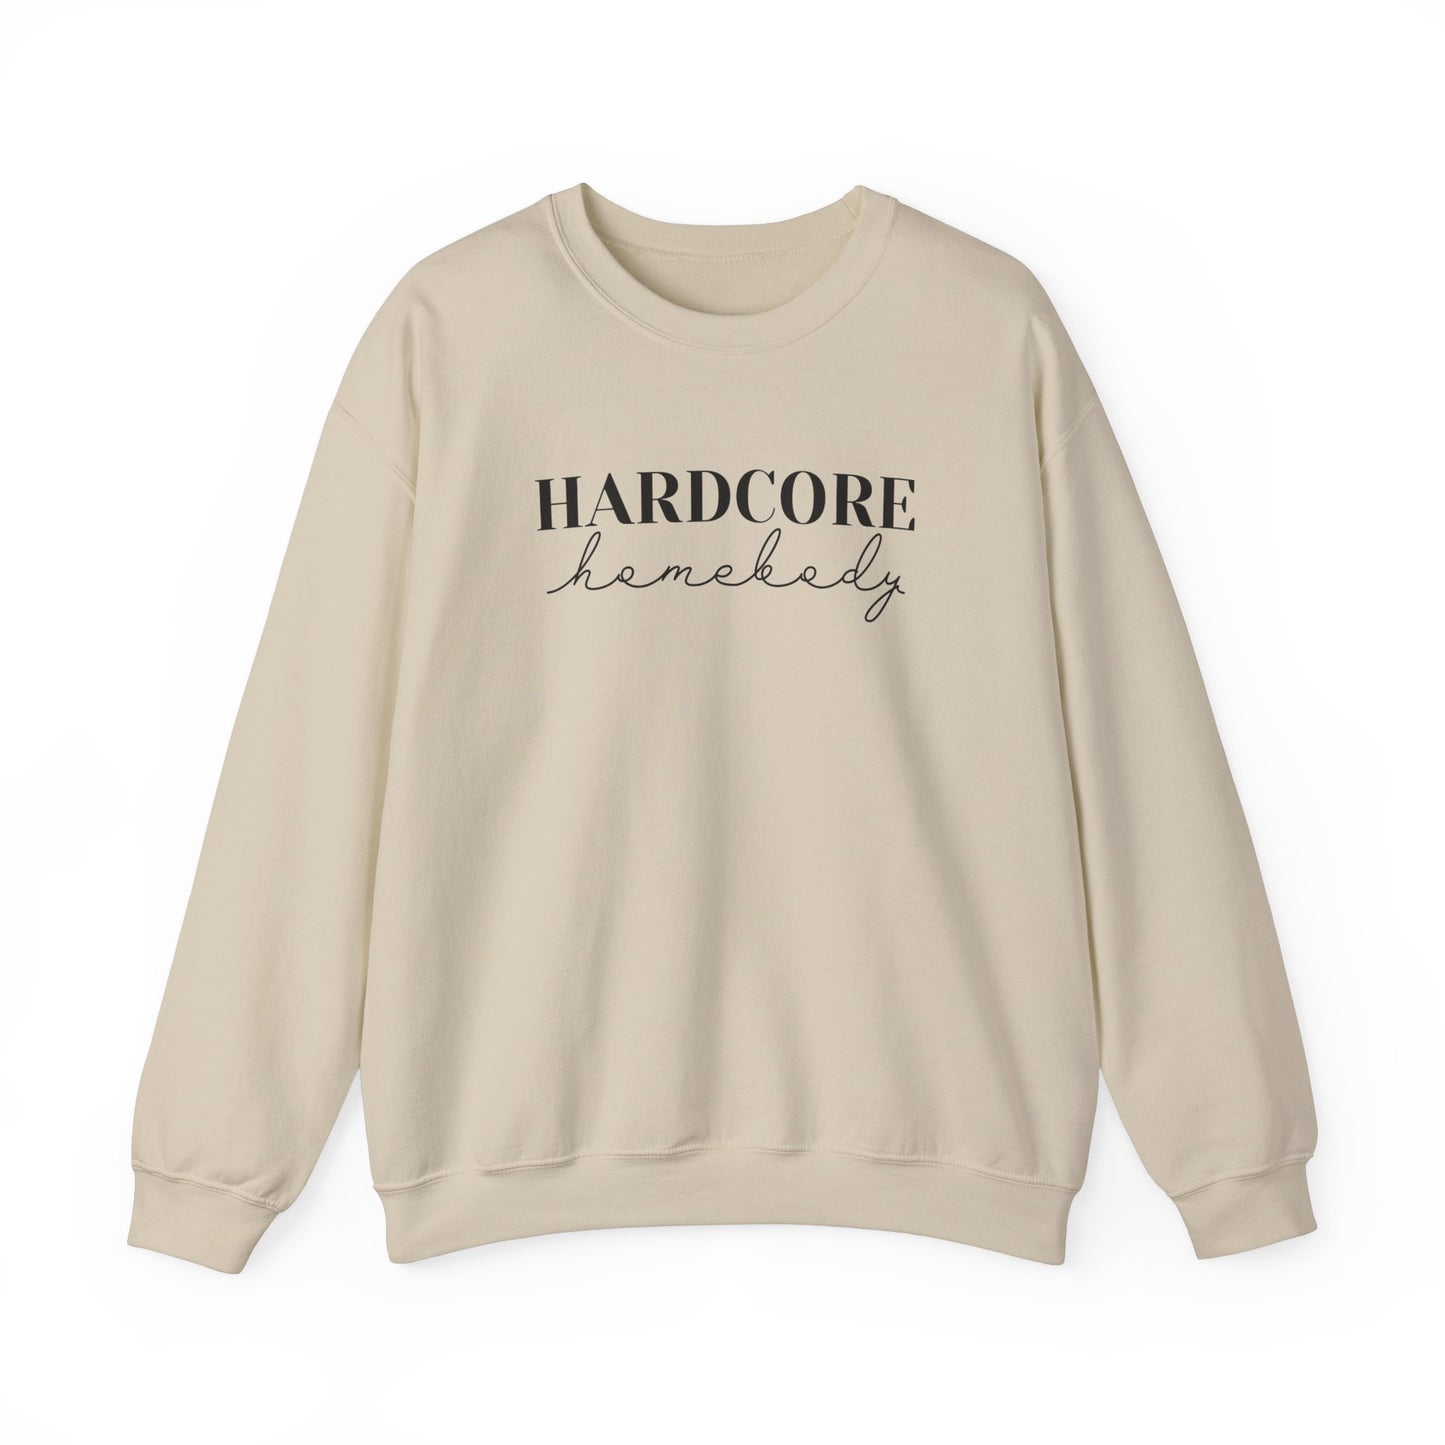 "Hardcore Homebody" Unisex Heavy Blend™ Crewneck Sweatshirt